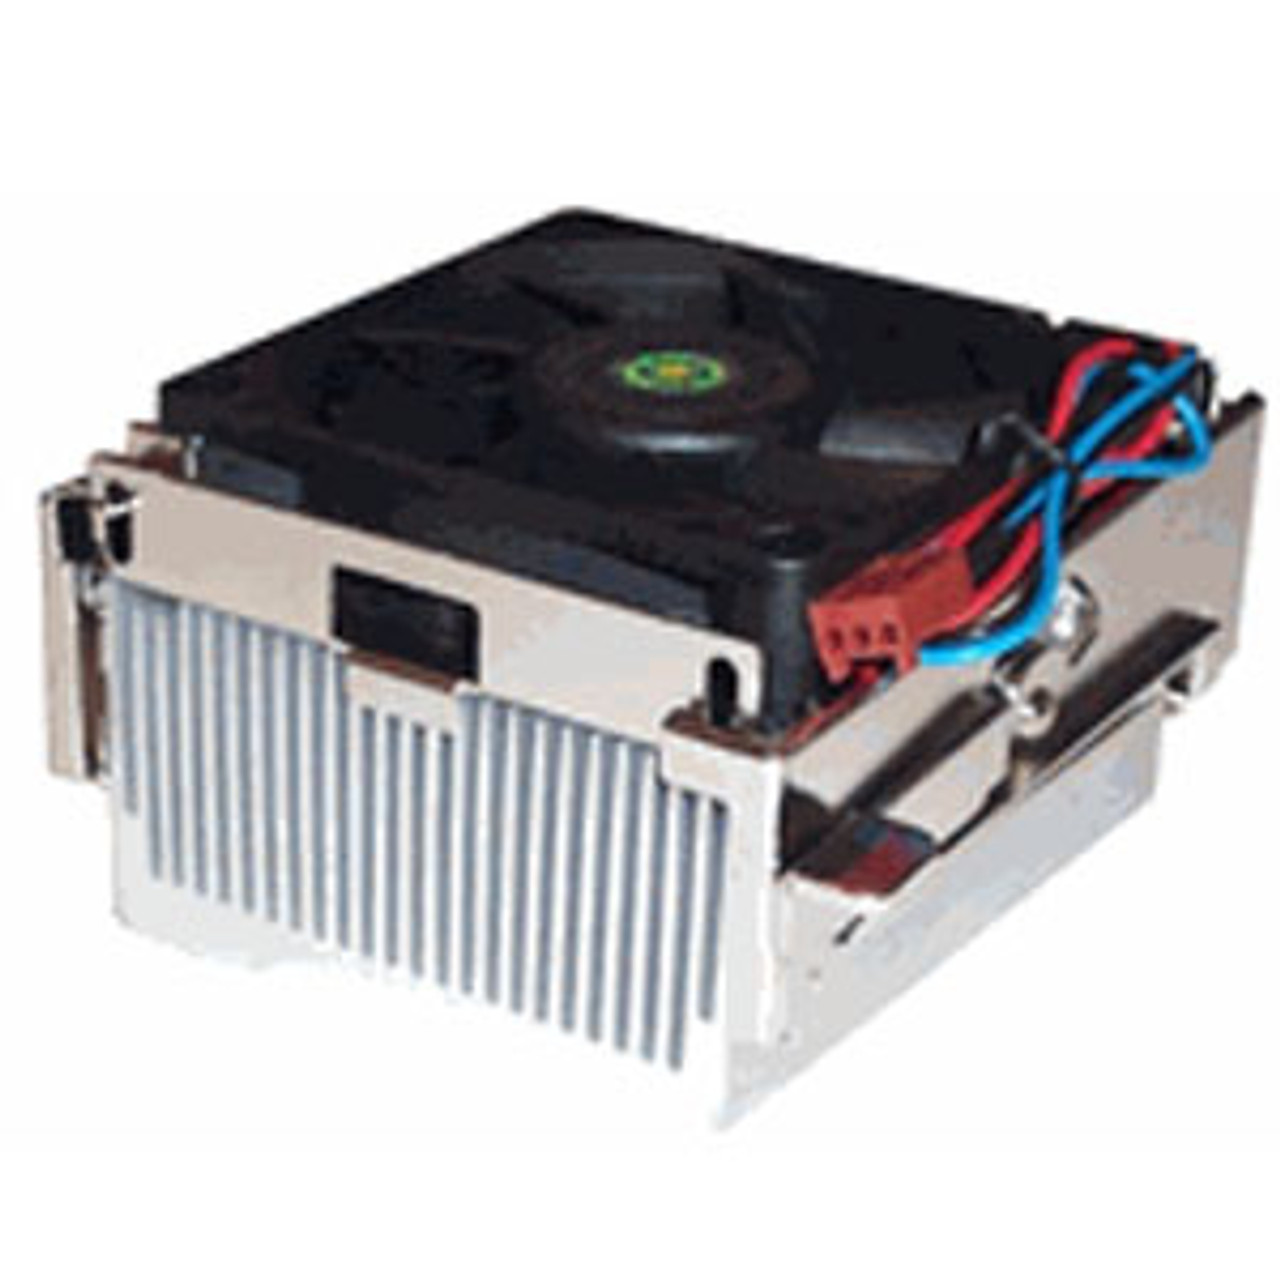 HSACFP4423 Intel Heat Sink/Cooling Fan for Pentium 4 Socket 423 Processor